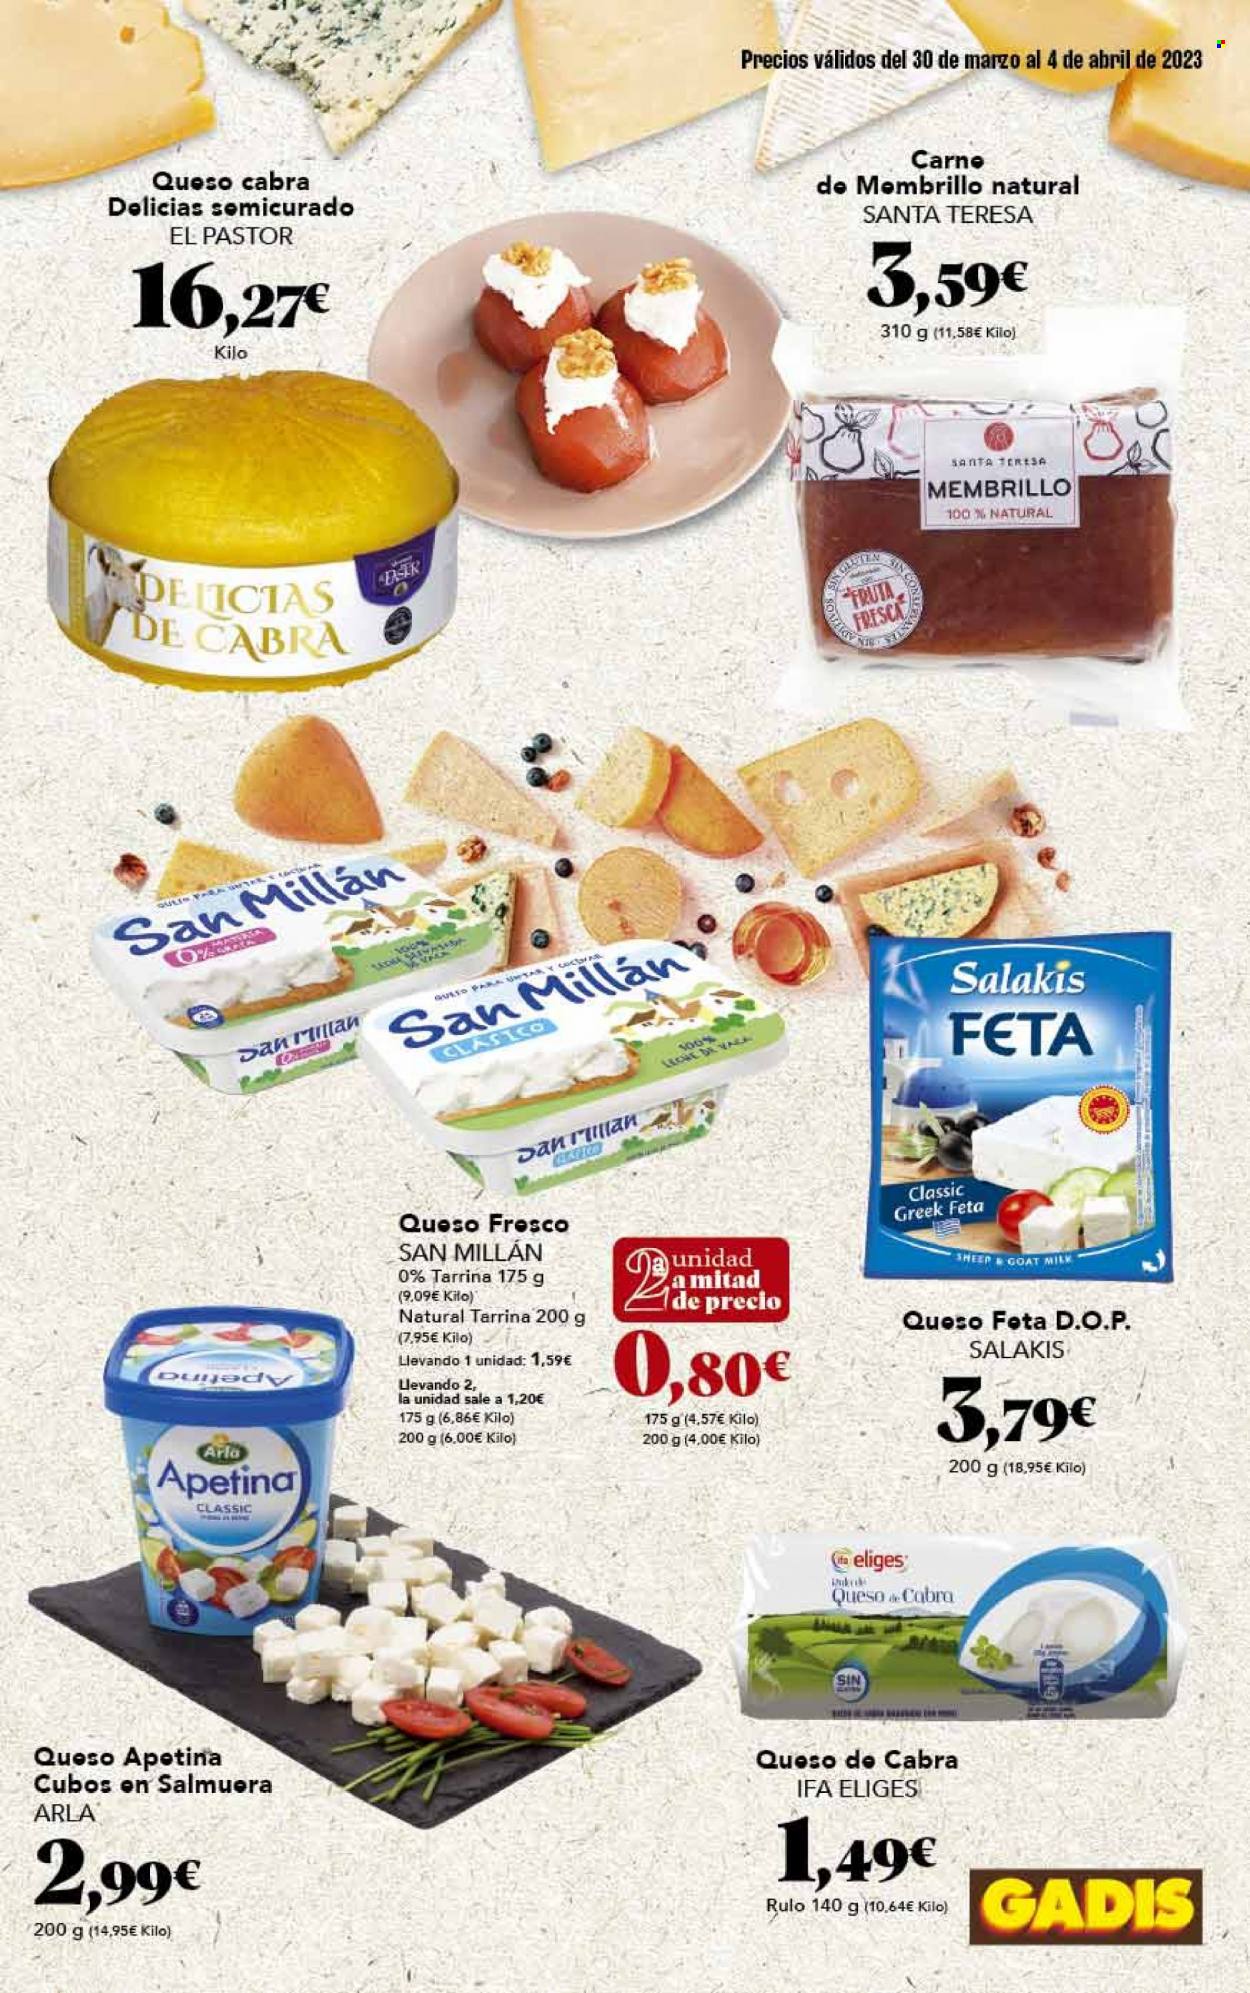 thumbnail - Folleto actual Gadis - 30/03/23 - 04/04/23 - Ventas - Ifa Eliges, queso, Arla, feta, queso de cabra, queso fresco, Salakis. Página 11.